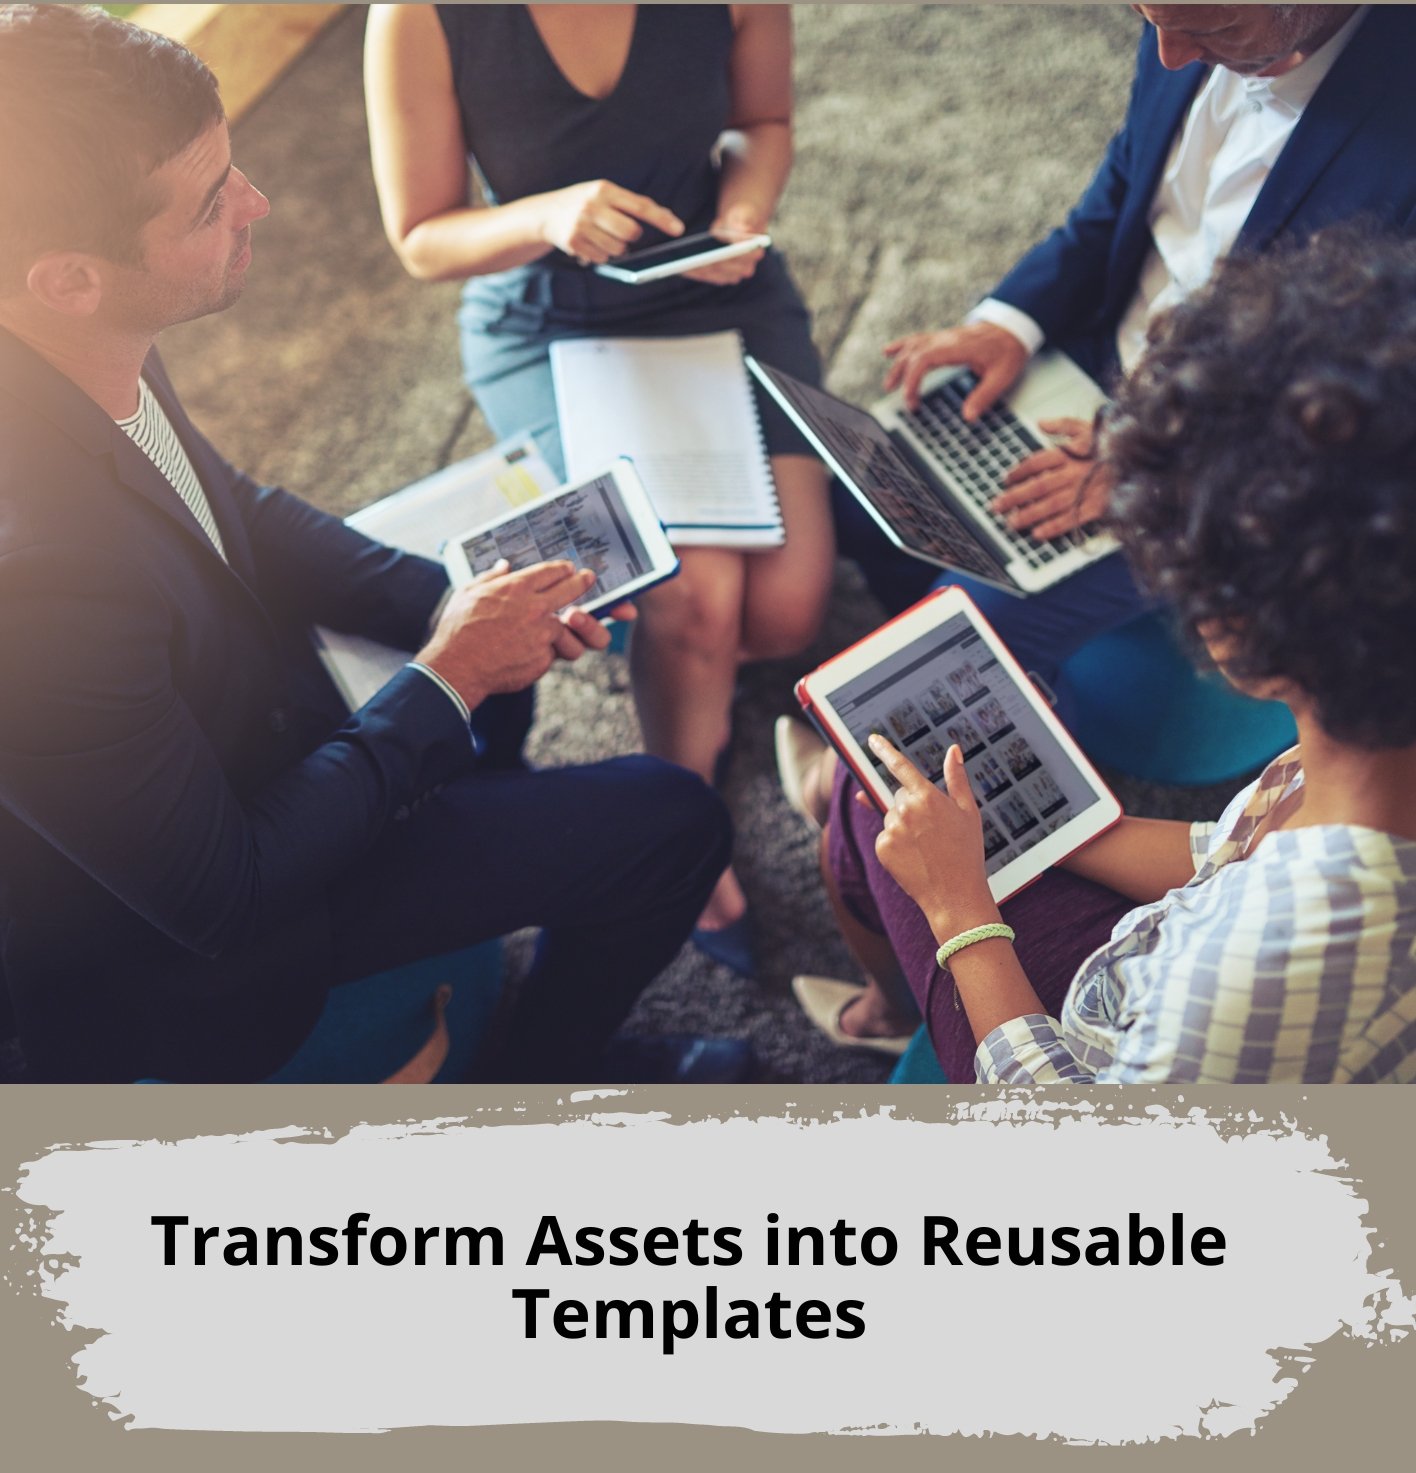 Transform Assets into Reusable Templates